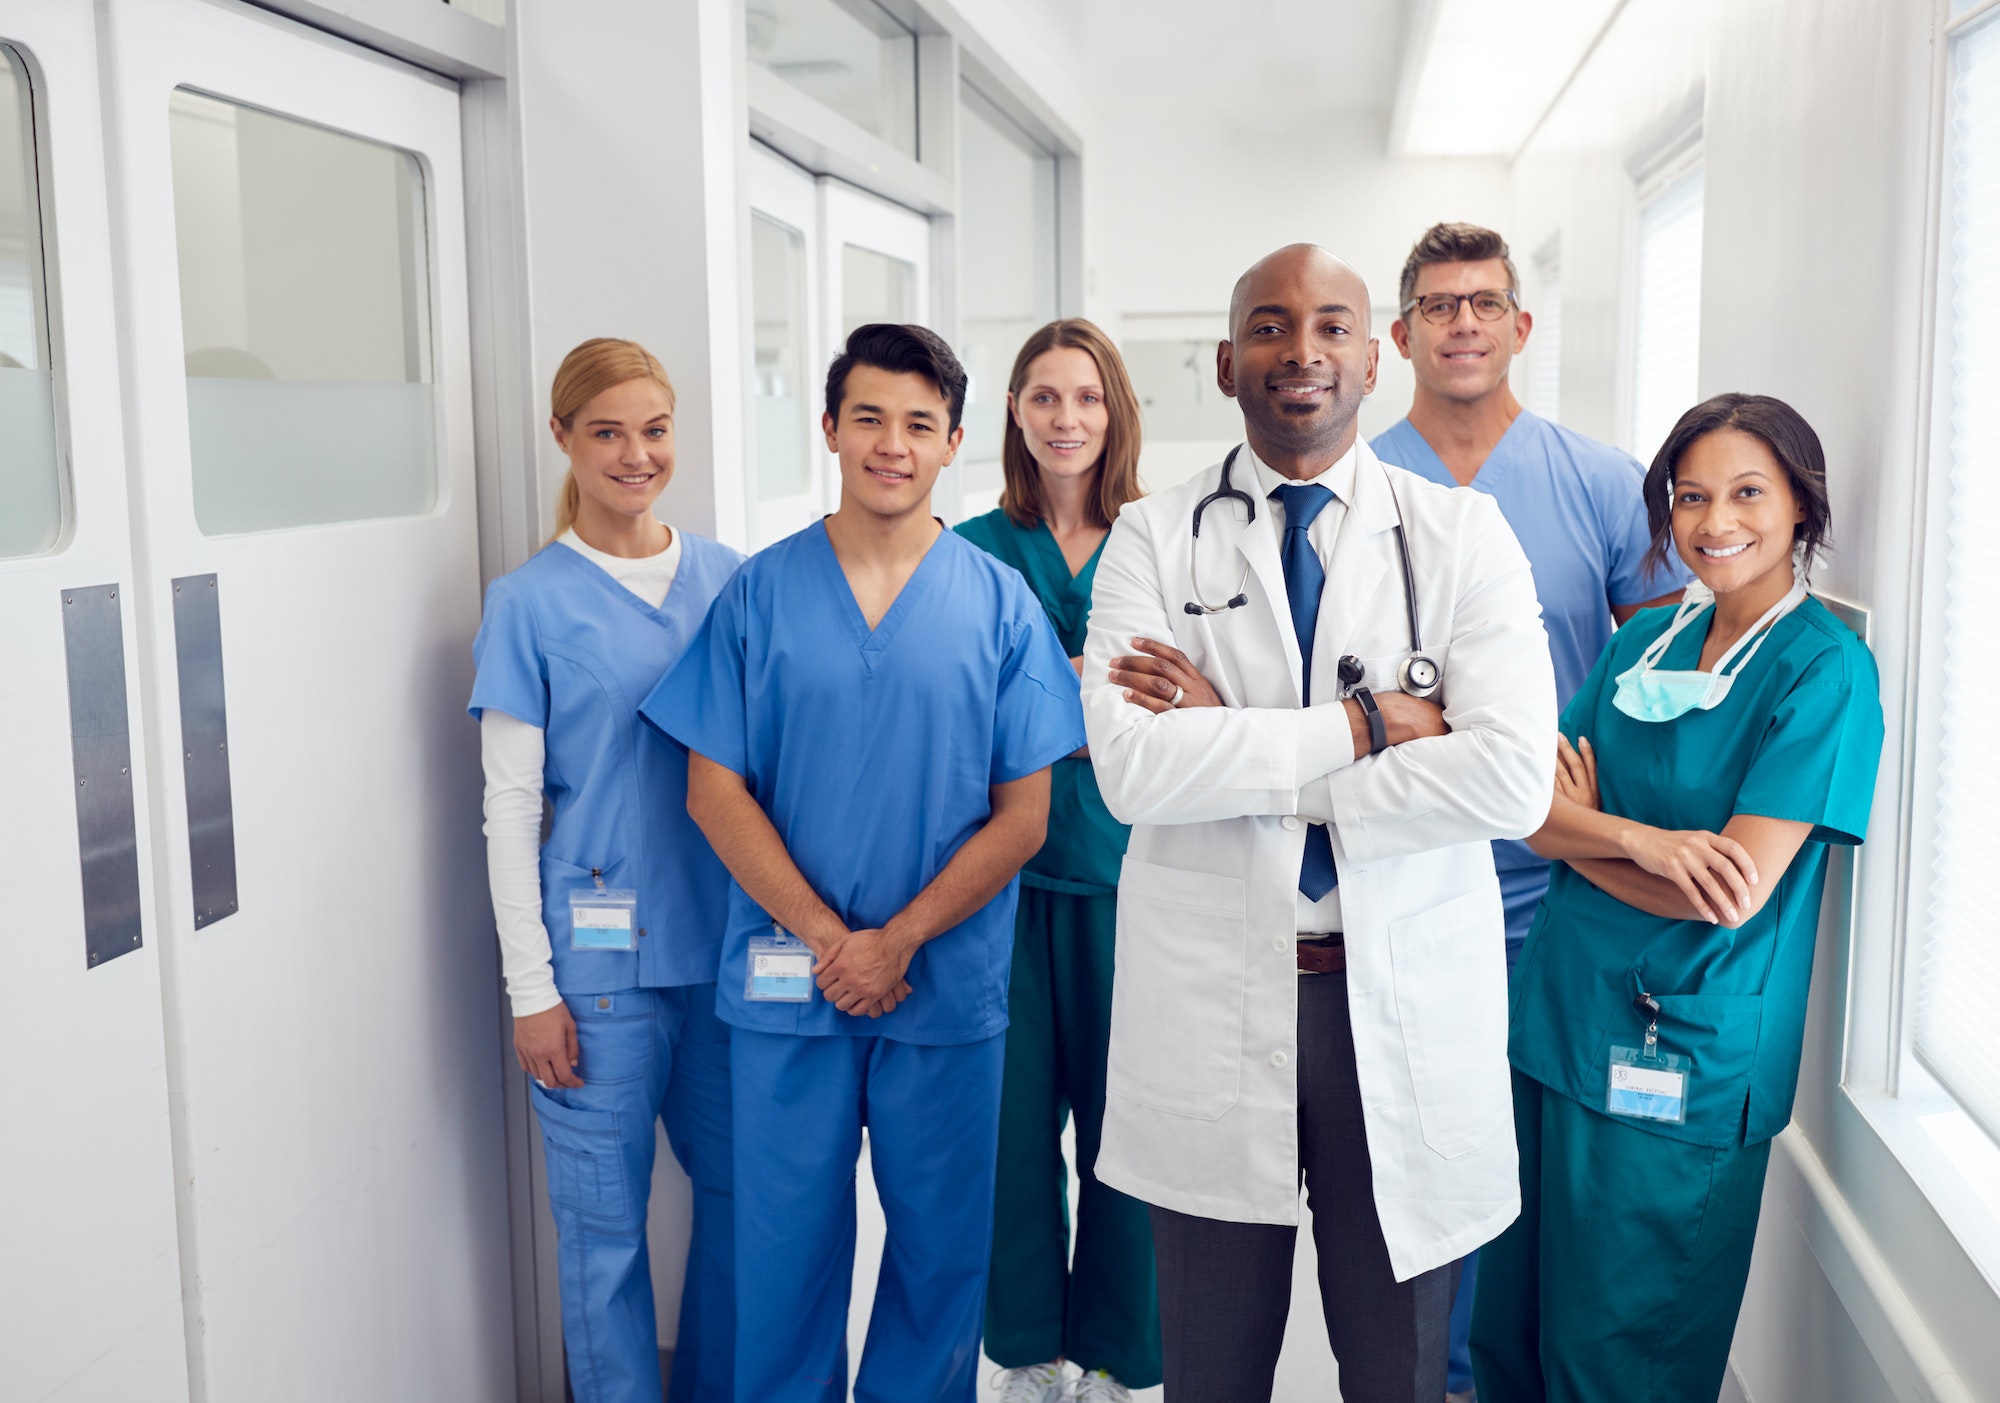 Portrait Of Multi-Cultural Medical Team Standing In Hospital Corridor